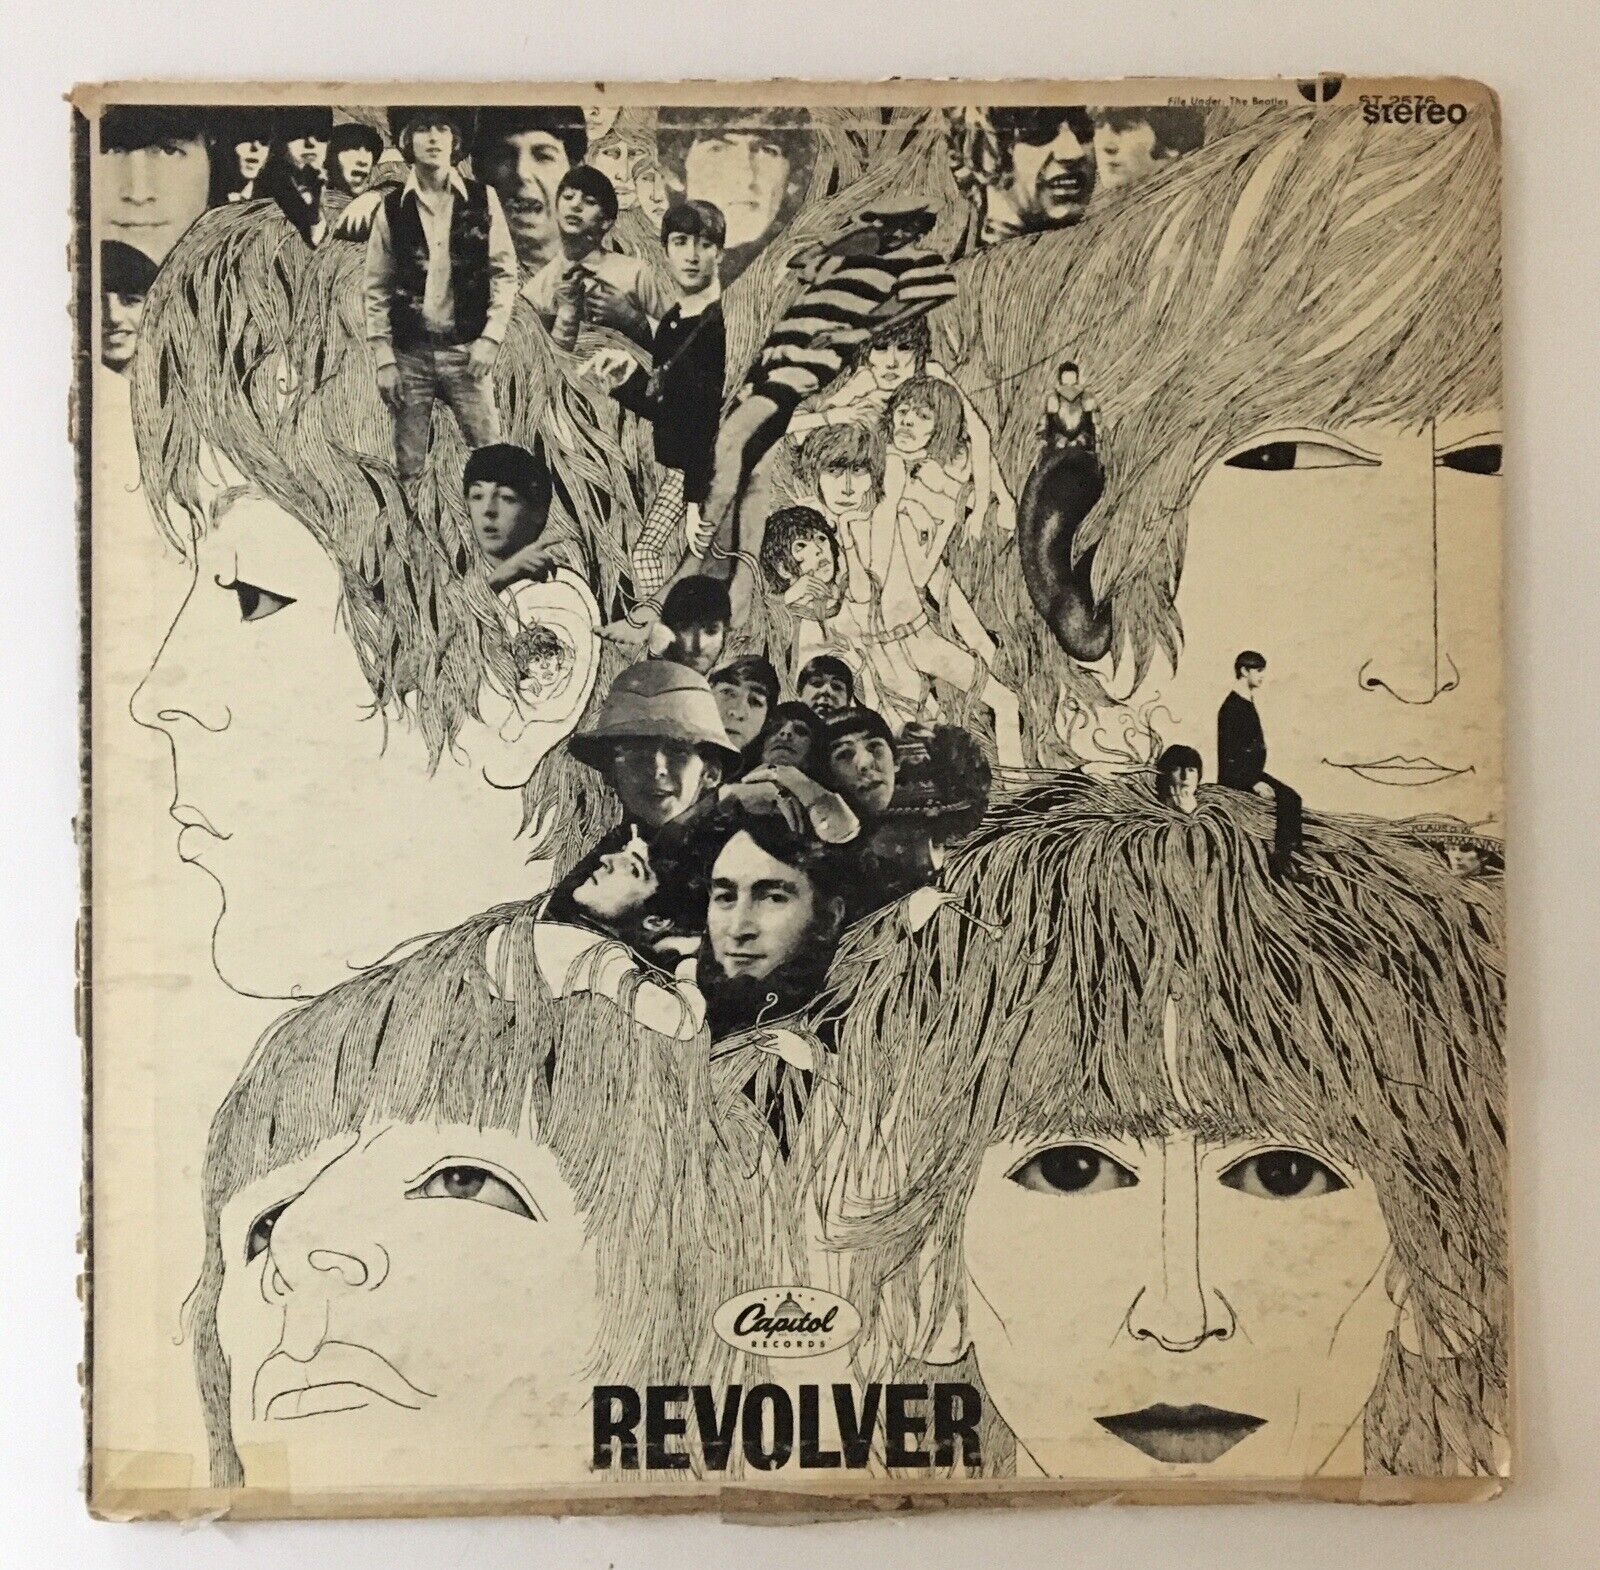 Revolver [LP] The Beatles 1966 Vintage Vinyl Record Capitol  ST 2576 VG++ Stereo